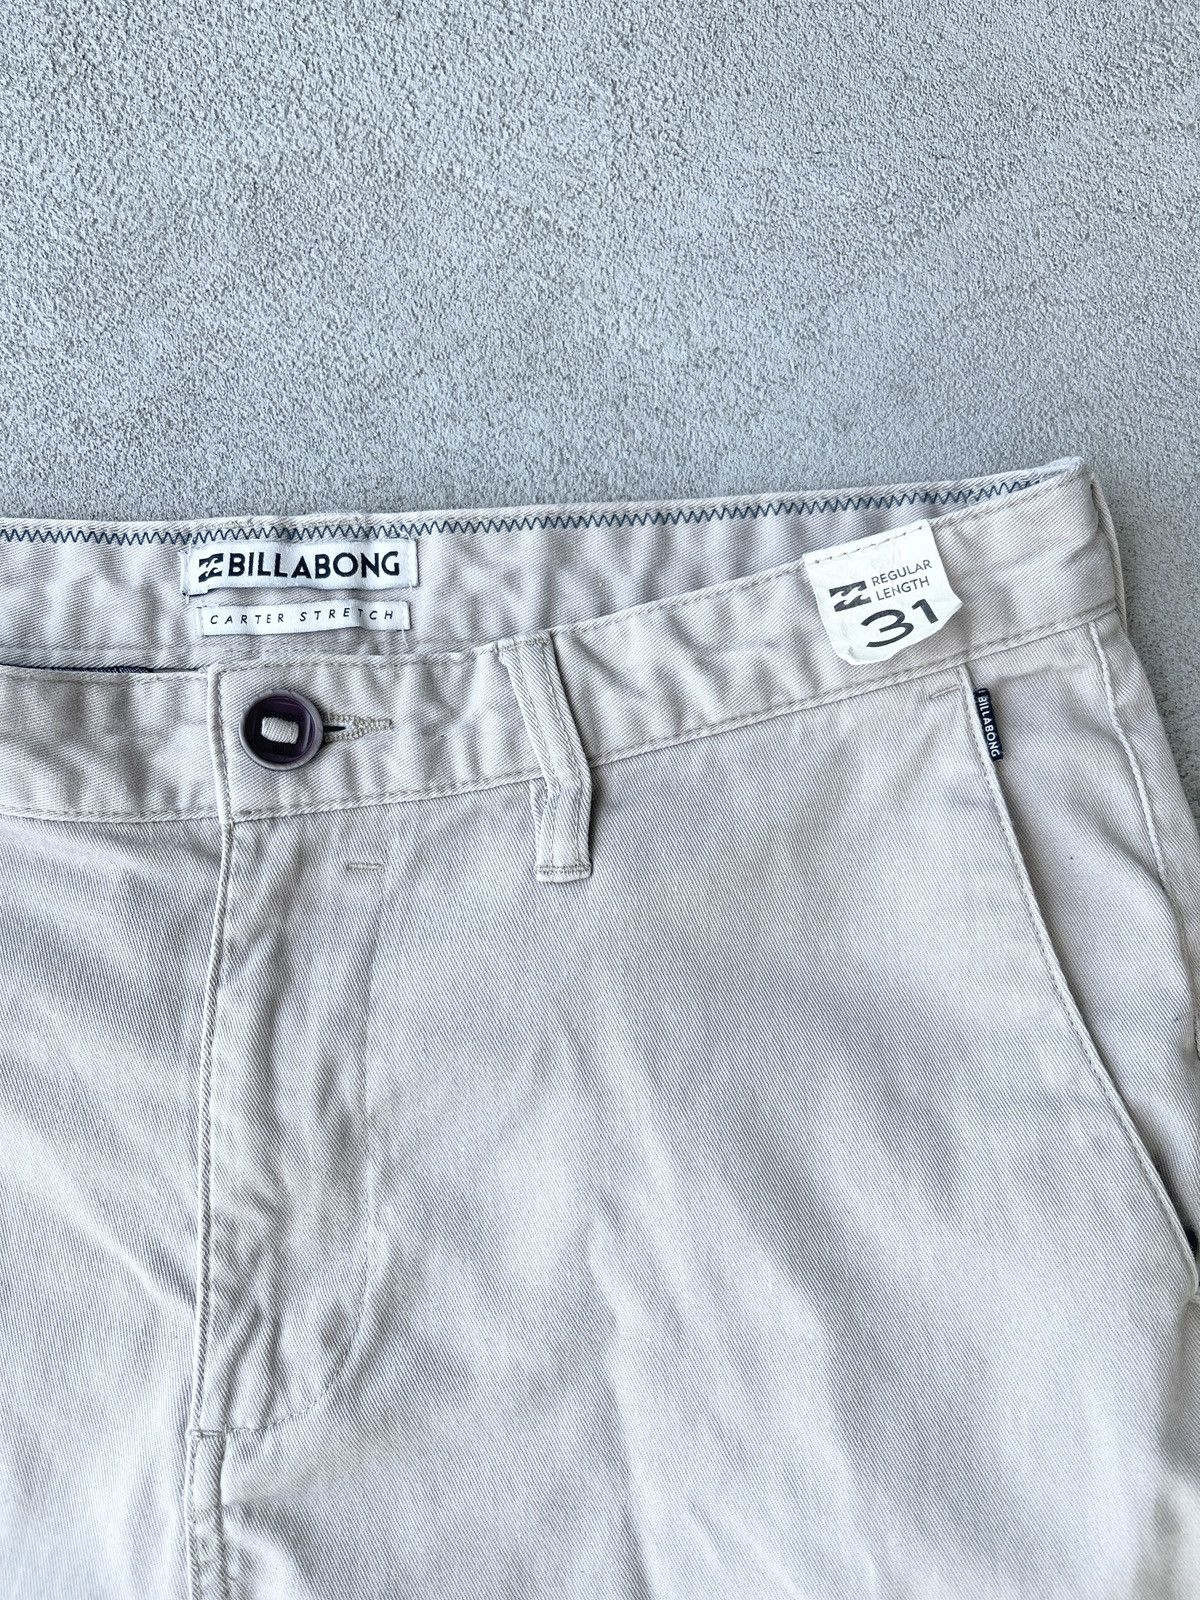 Vintage - STEAL! 2000s Billabong Khaki Shorts - 2